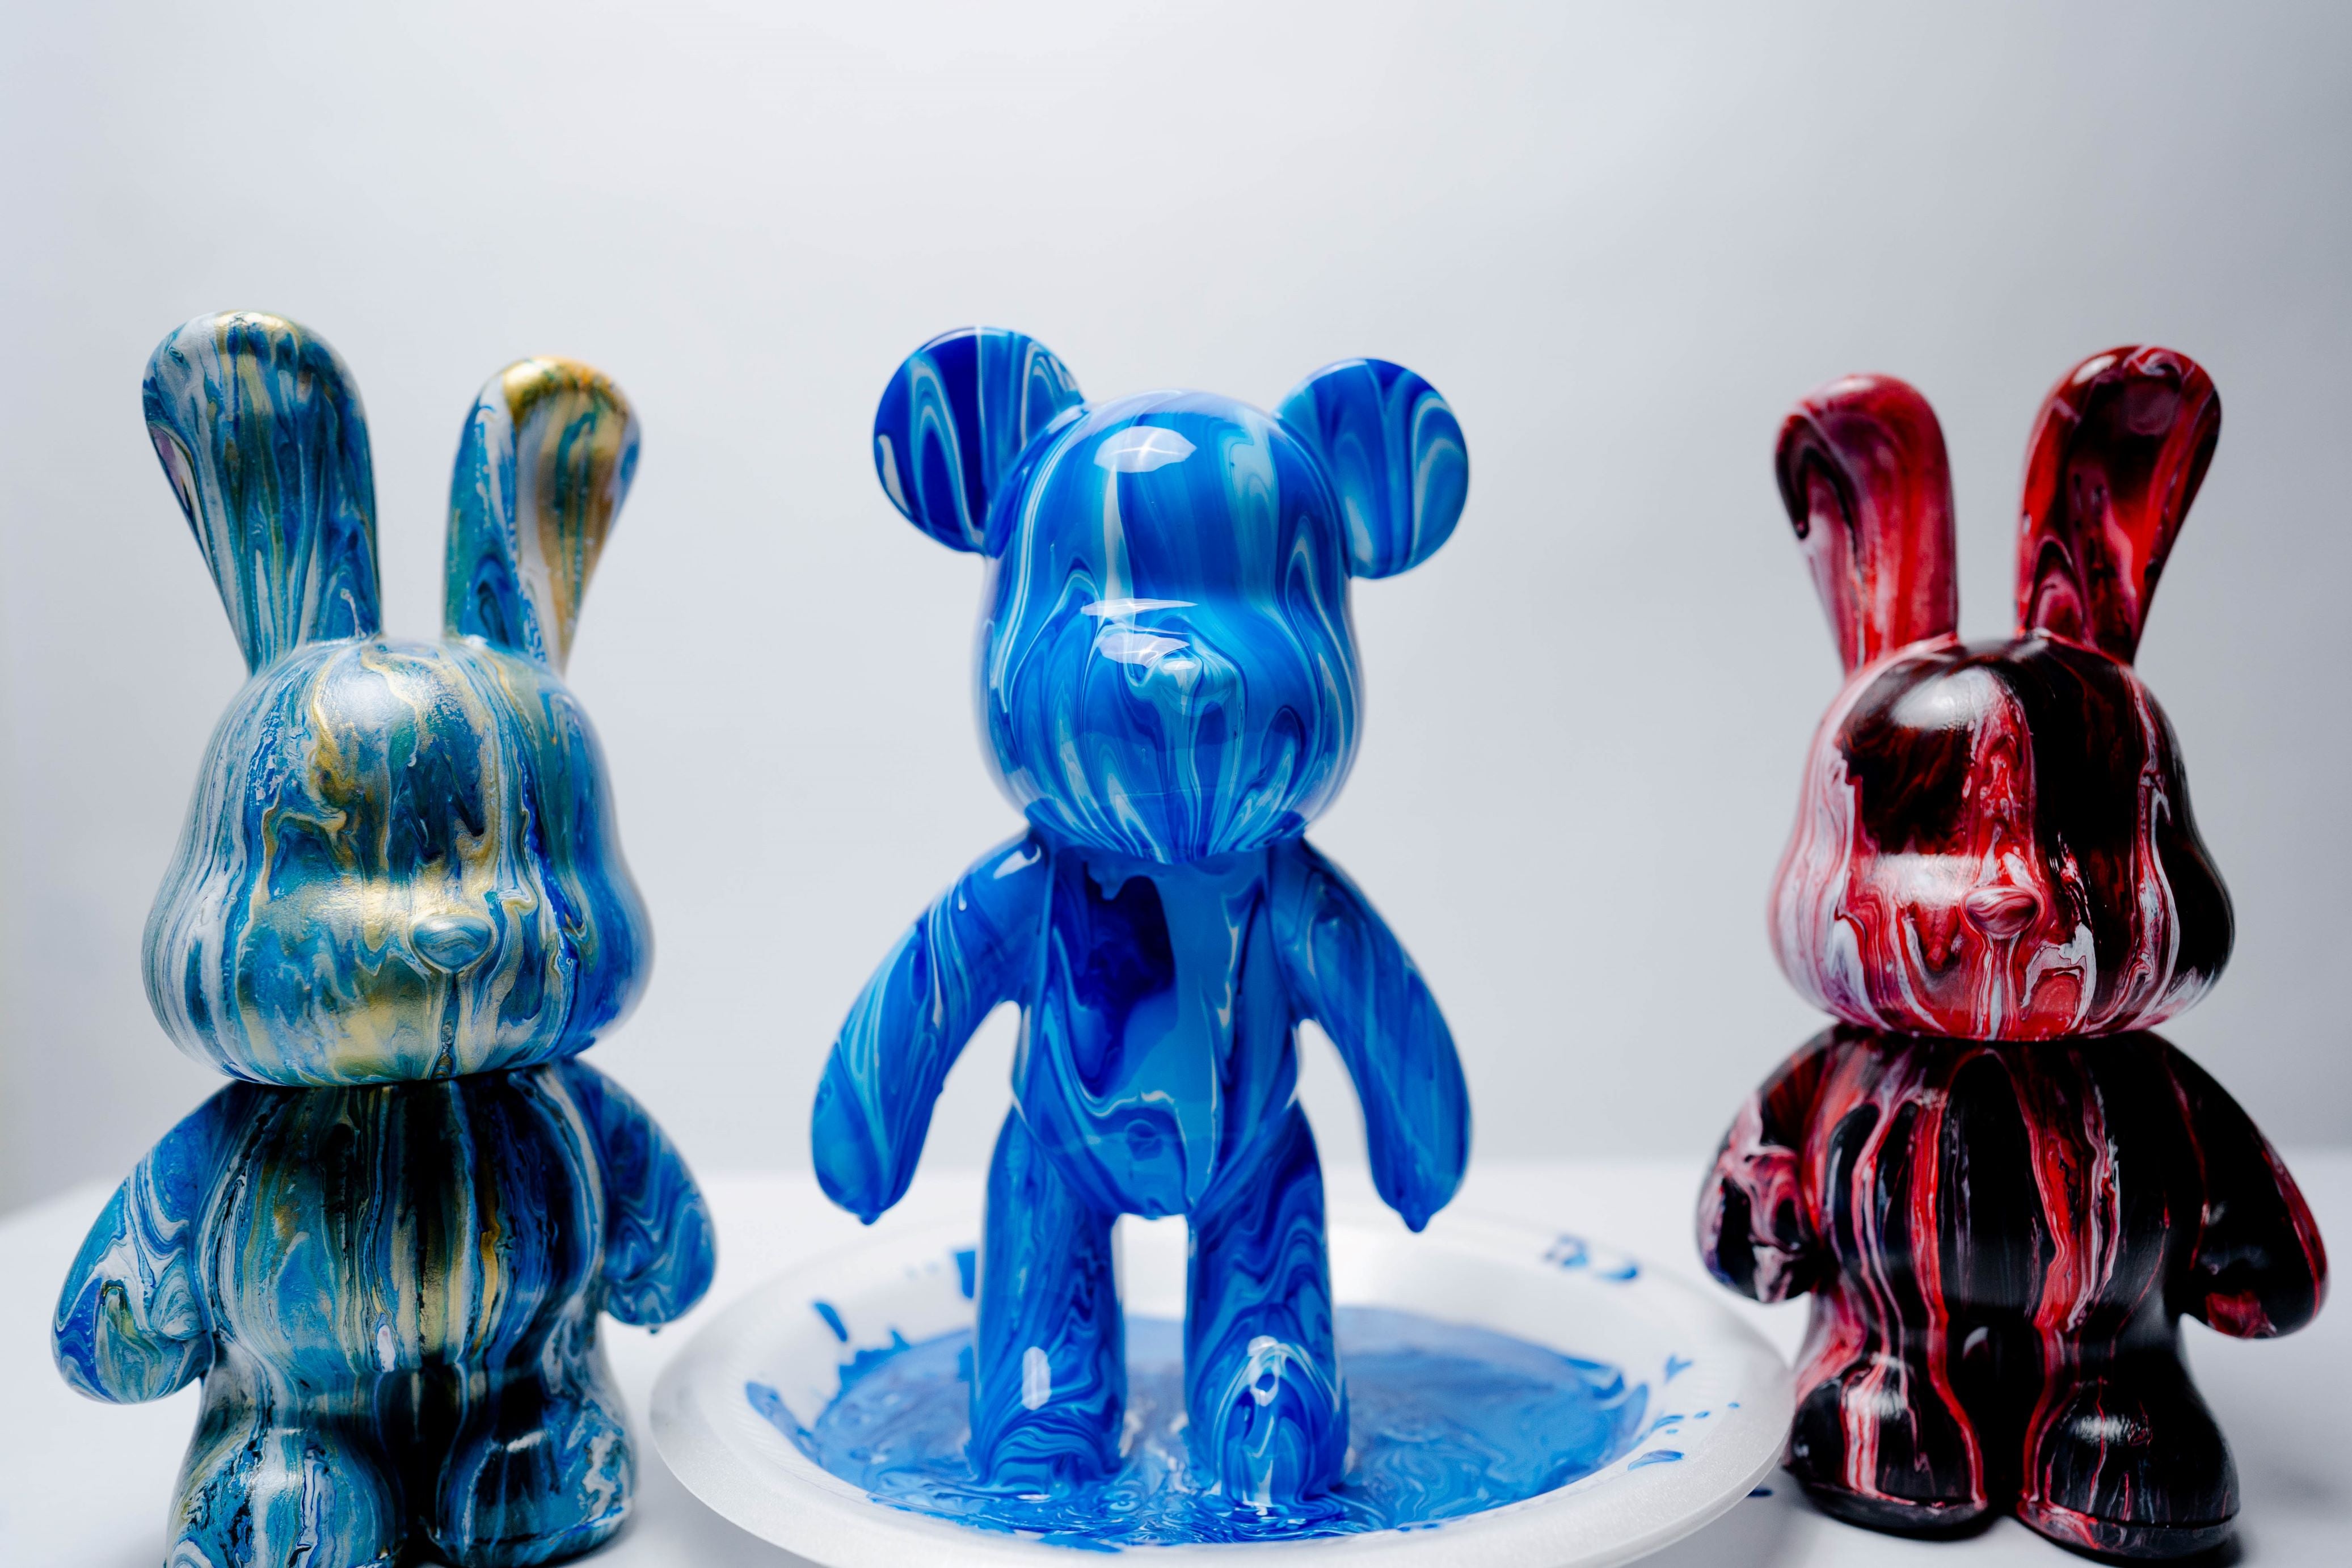 Creative Fluid Bear Craft Kits For Adults